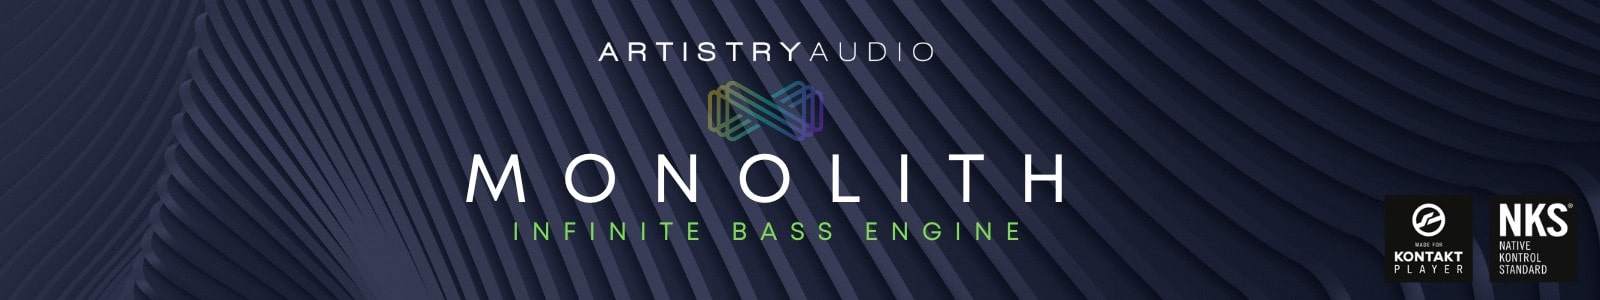 Artistry Audio MONOLITH